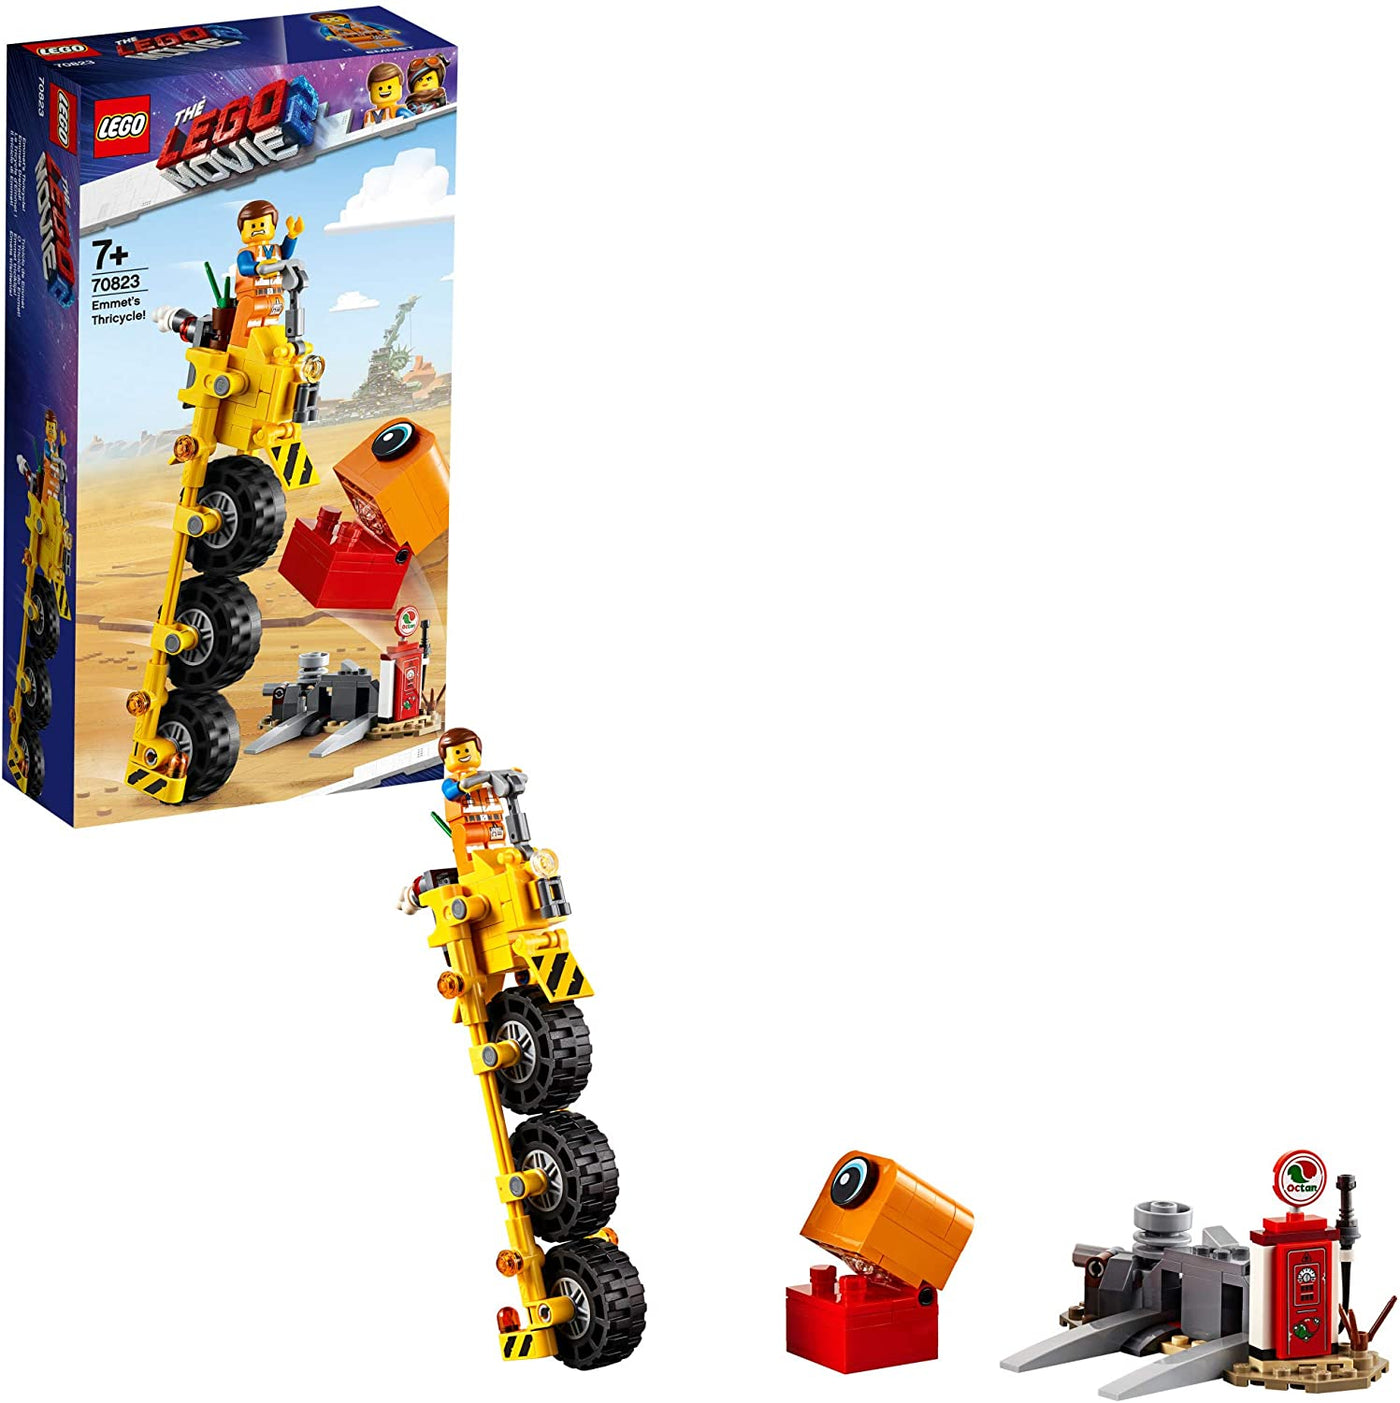 Emmet's Thricycle!: The Lego Movie 2 - 70823 | LEGO®